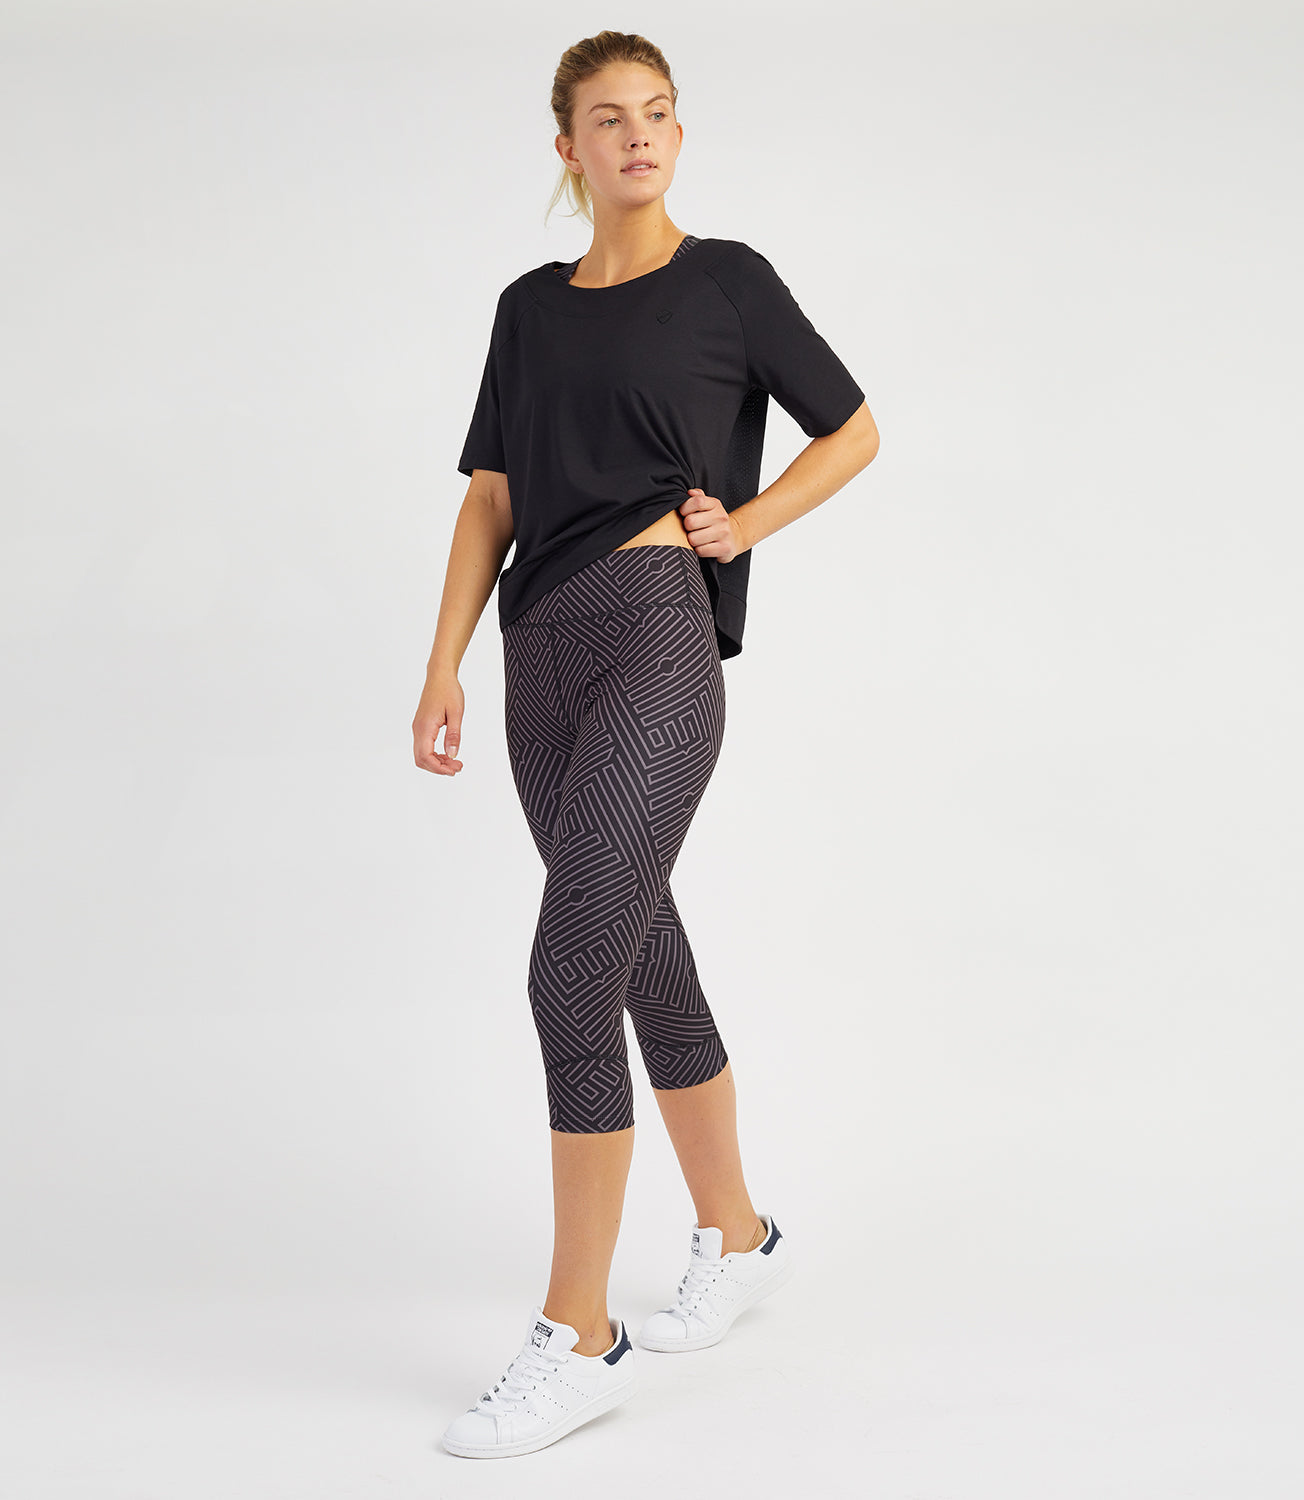 Default Tennis/Fitness/Golf Clothing -Georgia Capri Leggings-PlayBrave-XS-Black/Anthracite Print-PlayBrave Sports UK